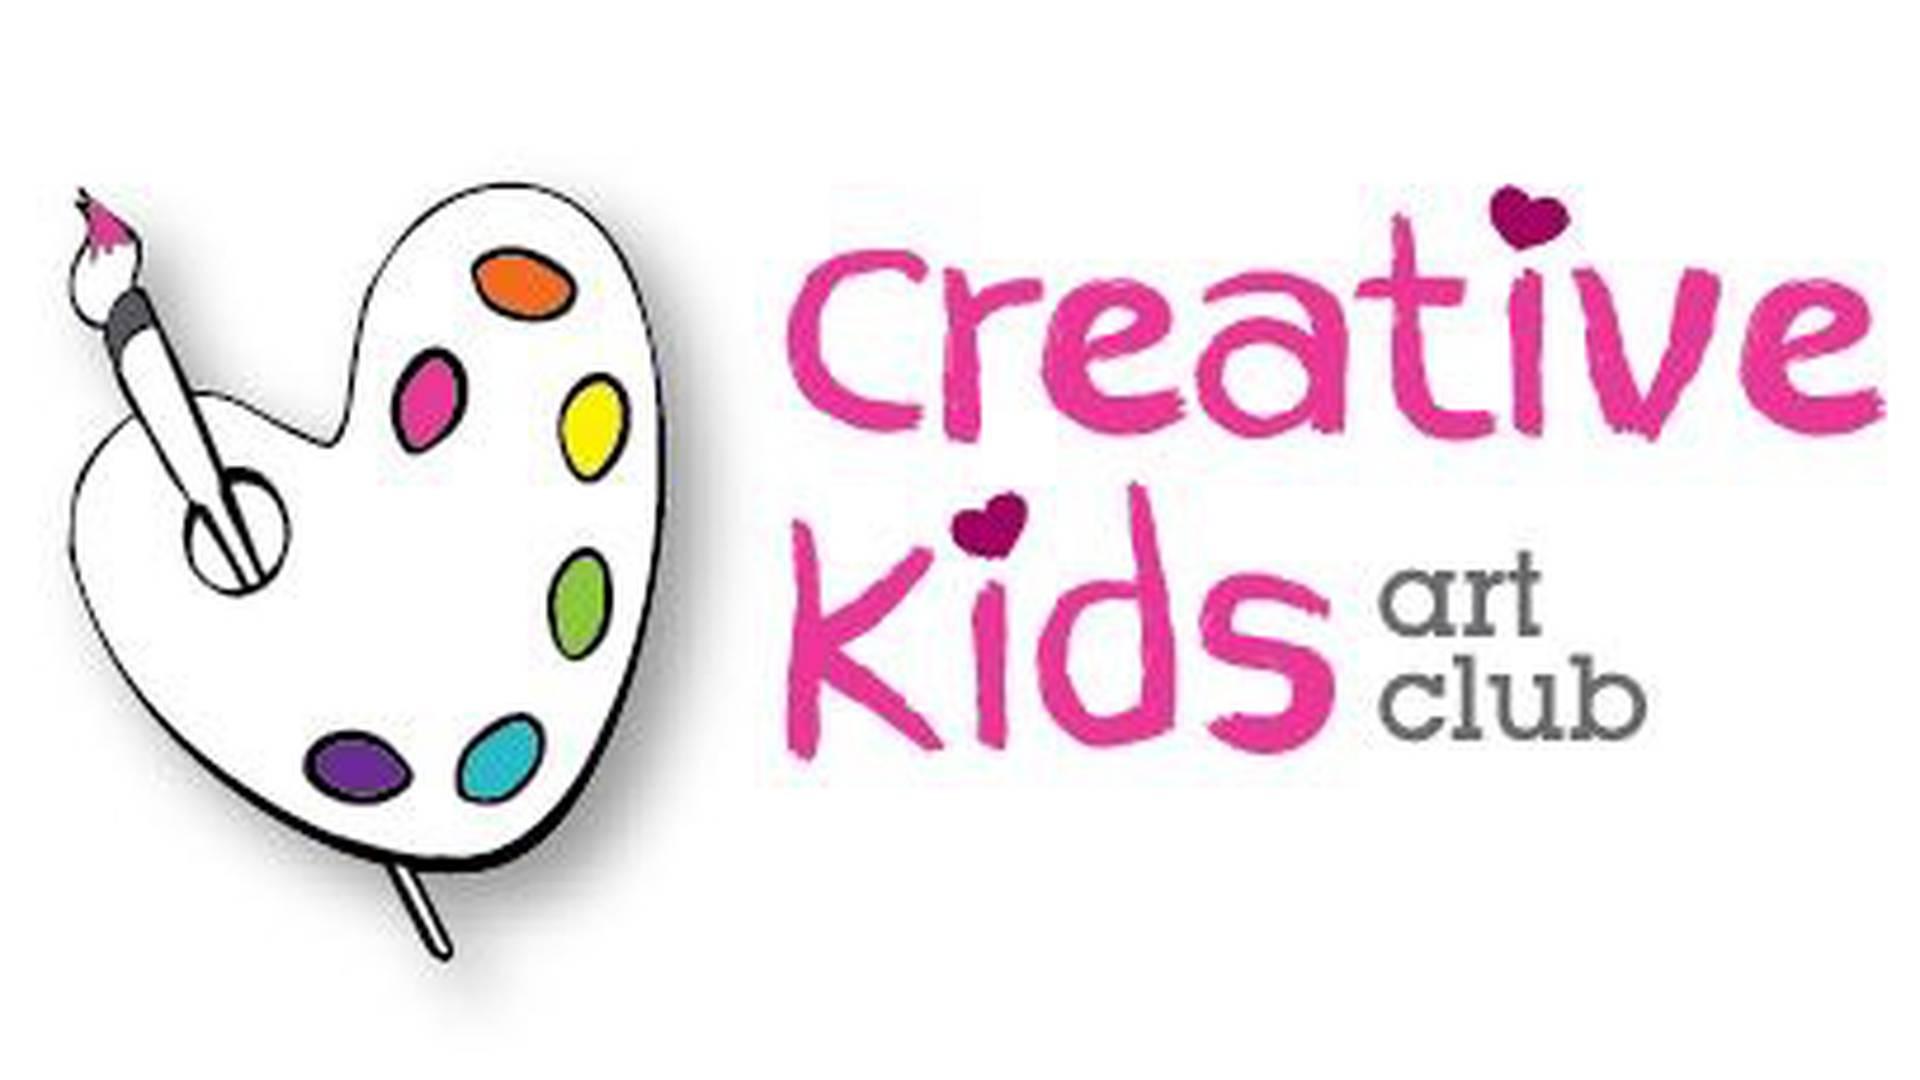 Creative Kids Art Club photo